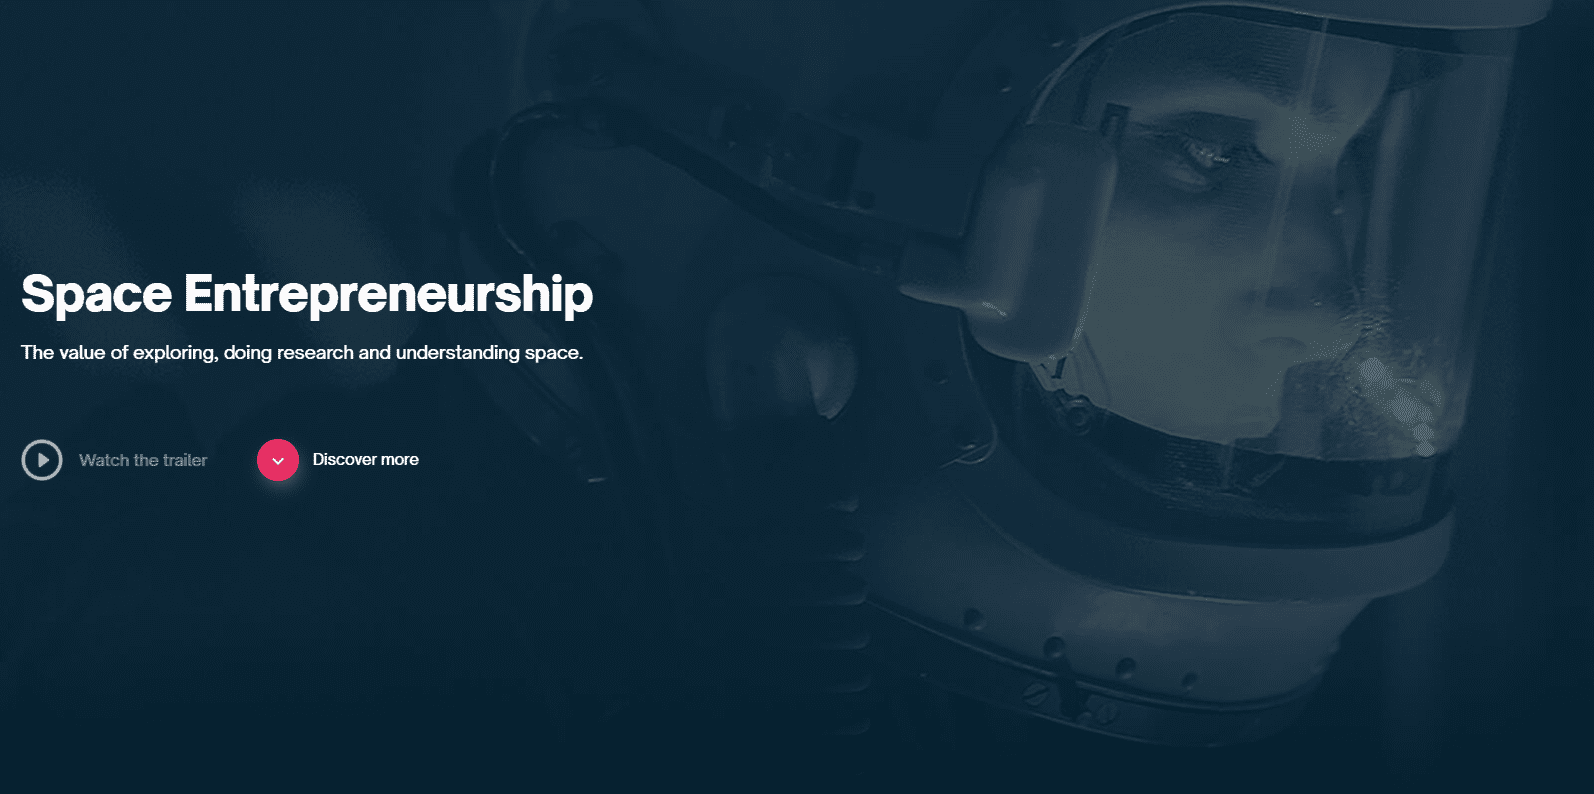 Apply now for the Space Entrepreneurship Course!